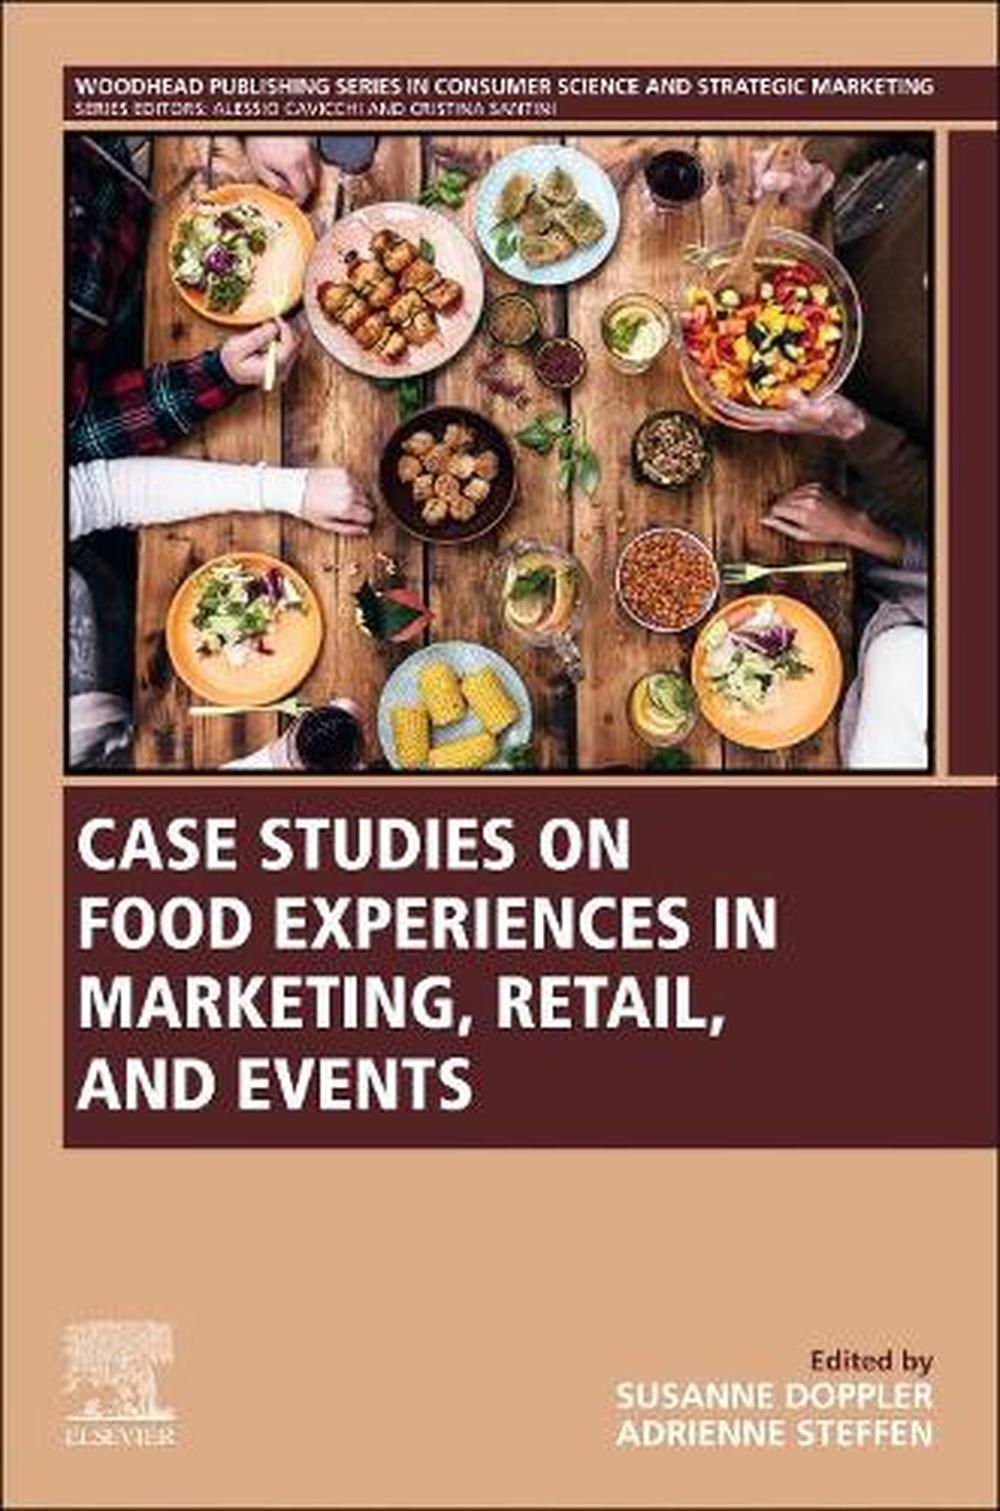 food company case study